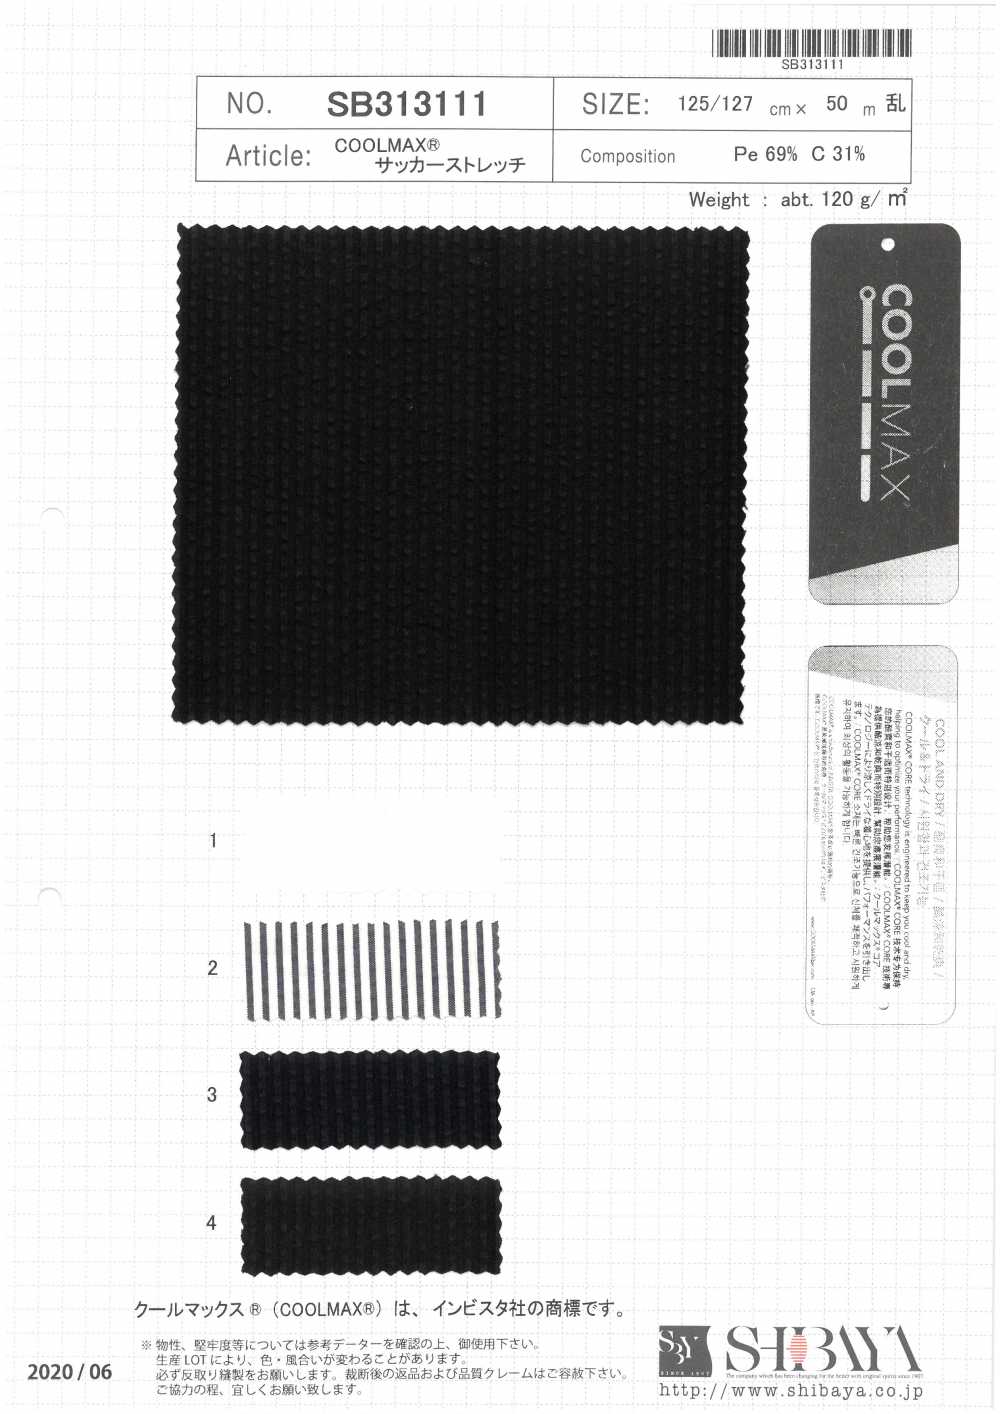 SB313111 COOLMAX® Seersucker Stretch[Textile / Fabric] SHIBAYA